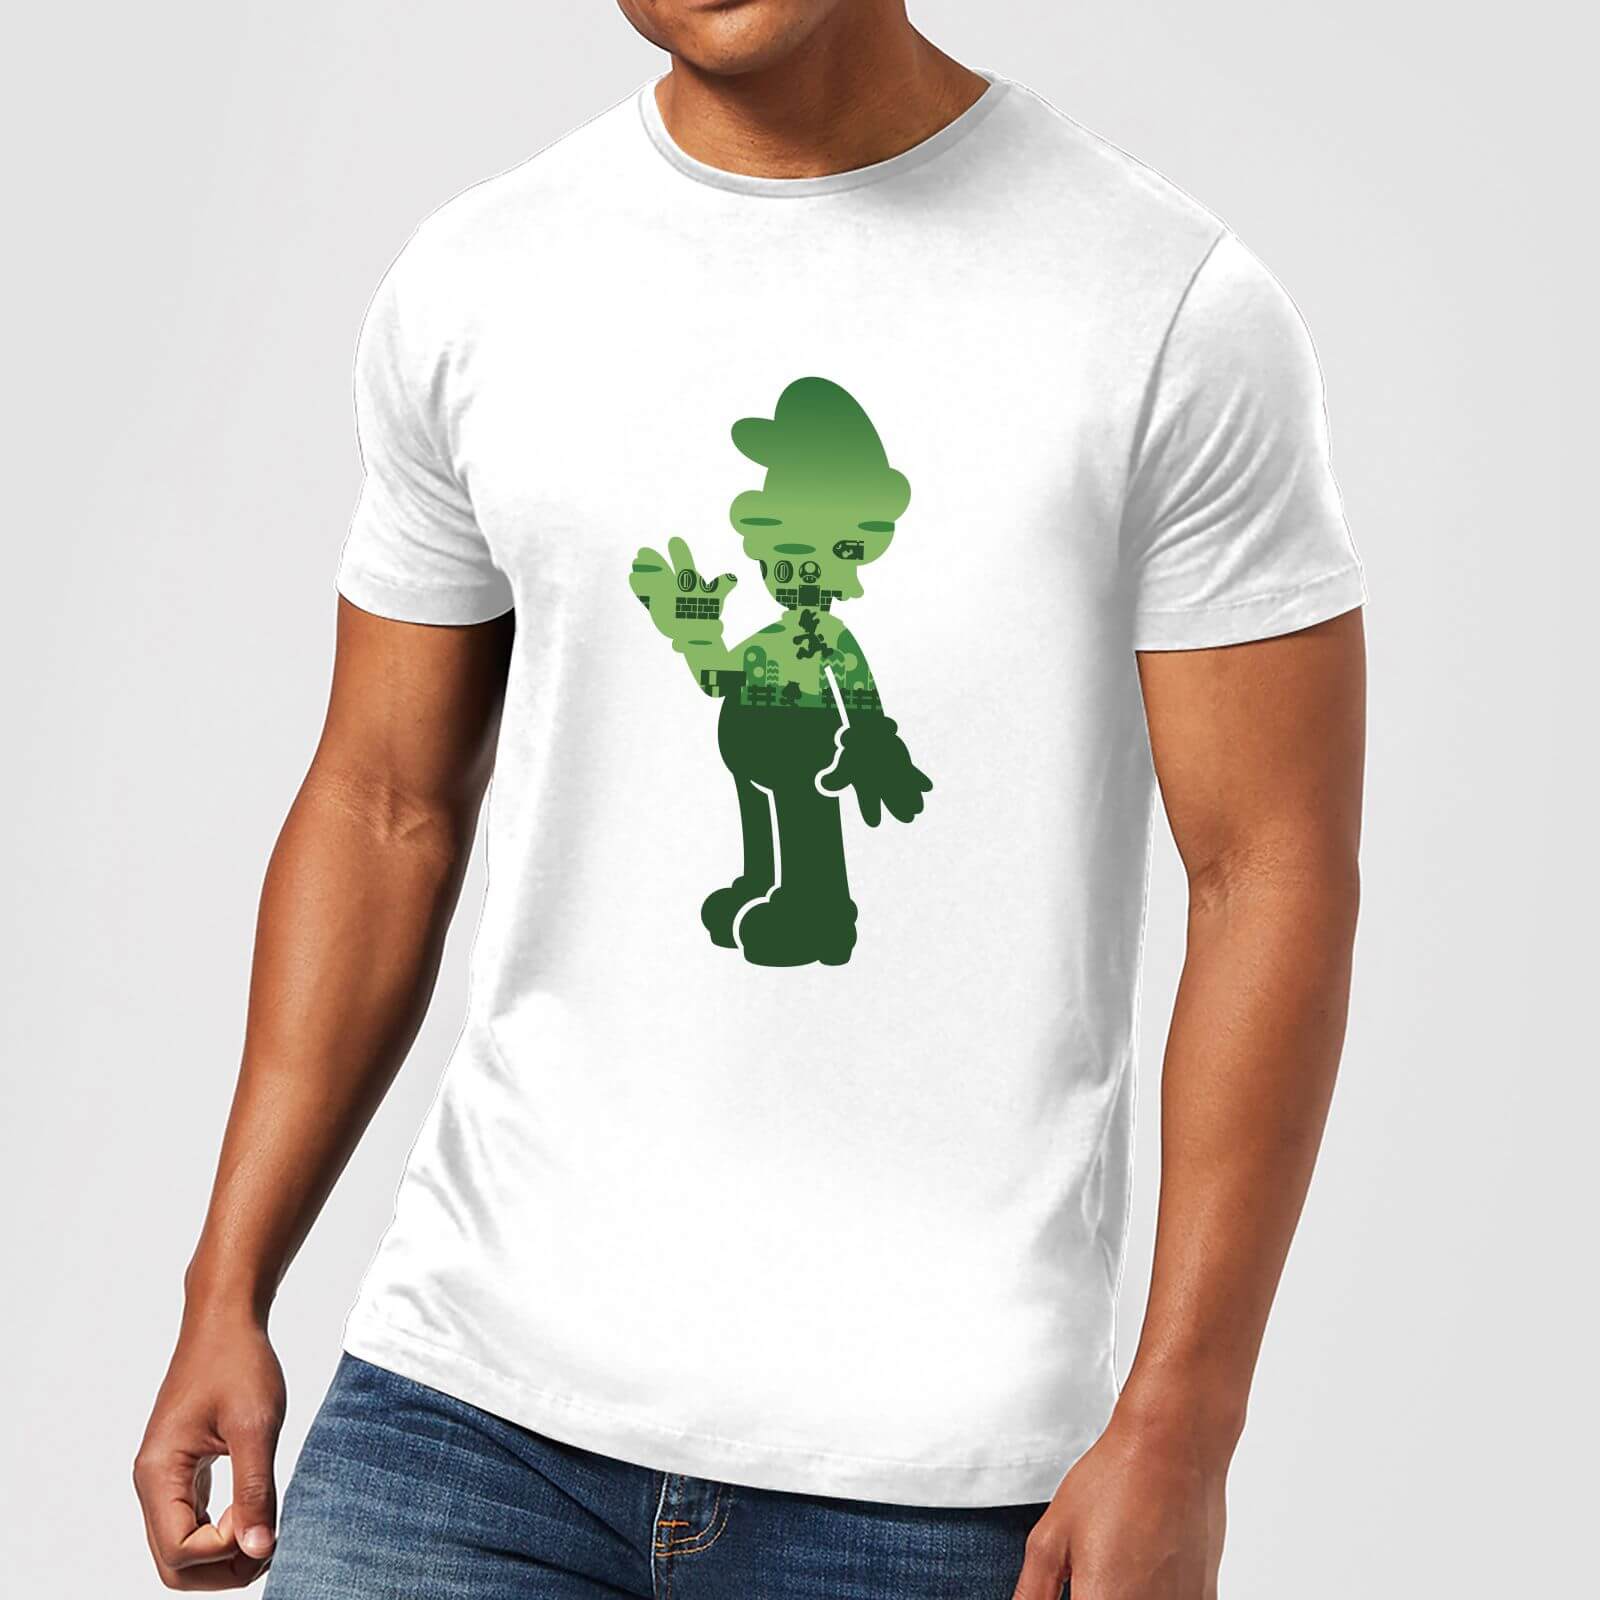 Nintendo Super Mario Luigi Silhouette Men's White T-Shirt - L - Light Grey